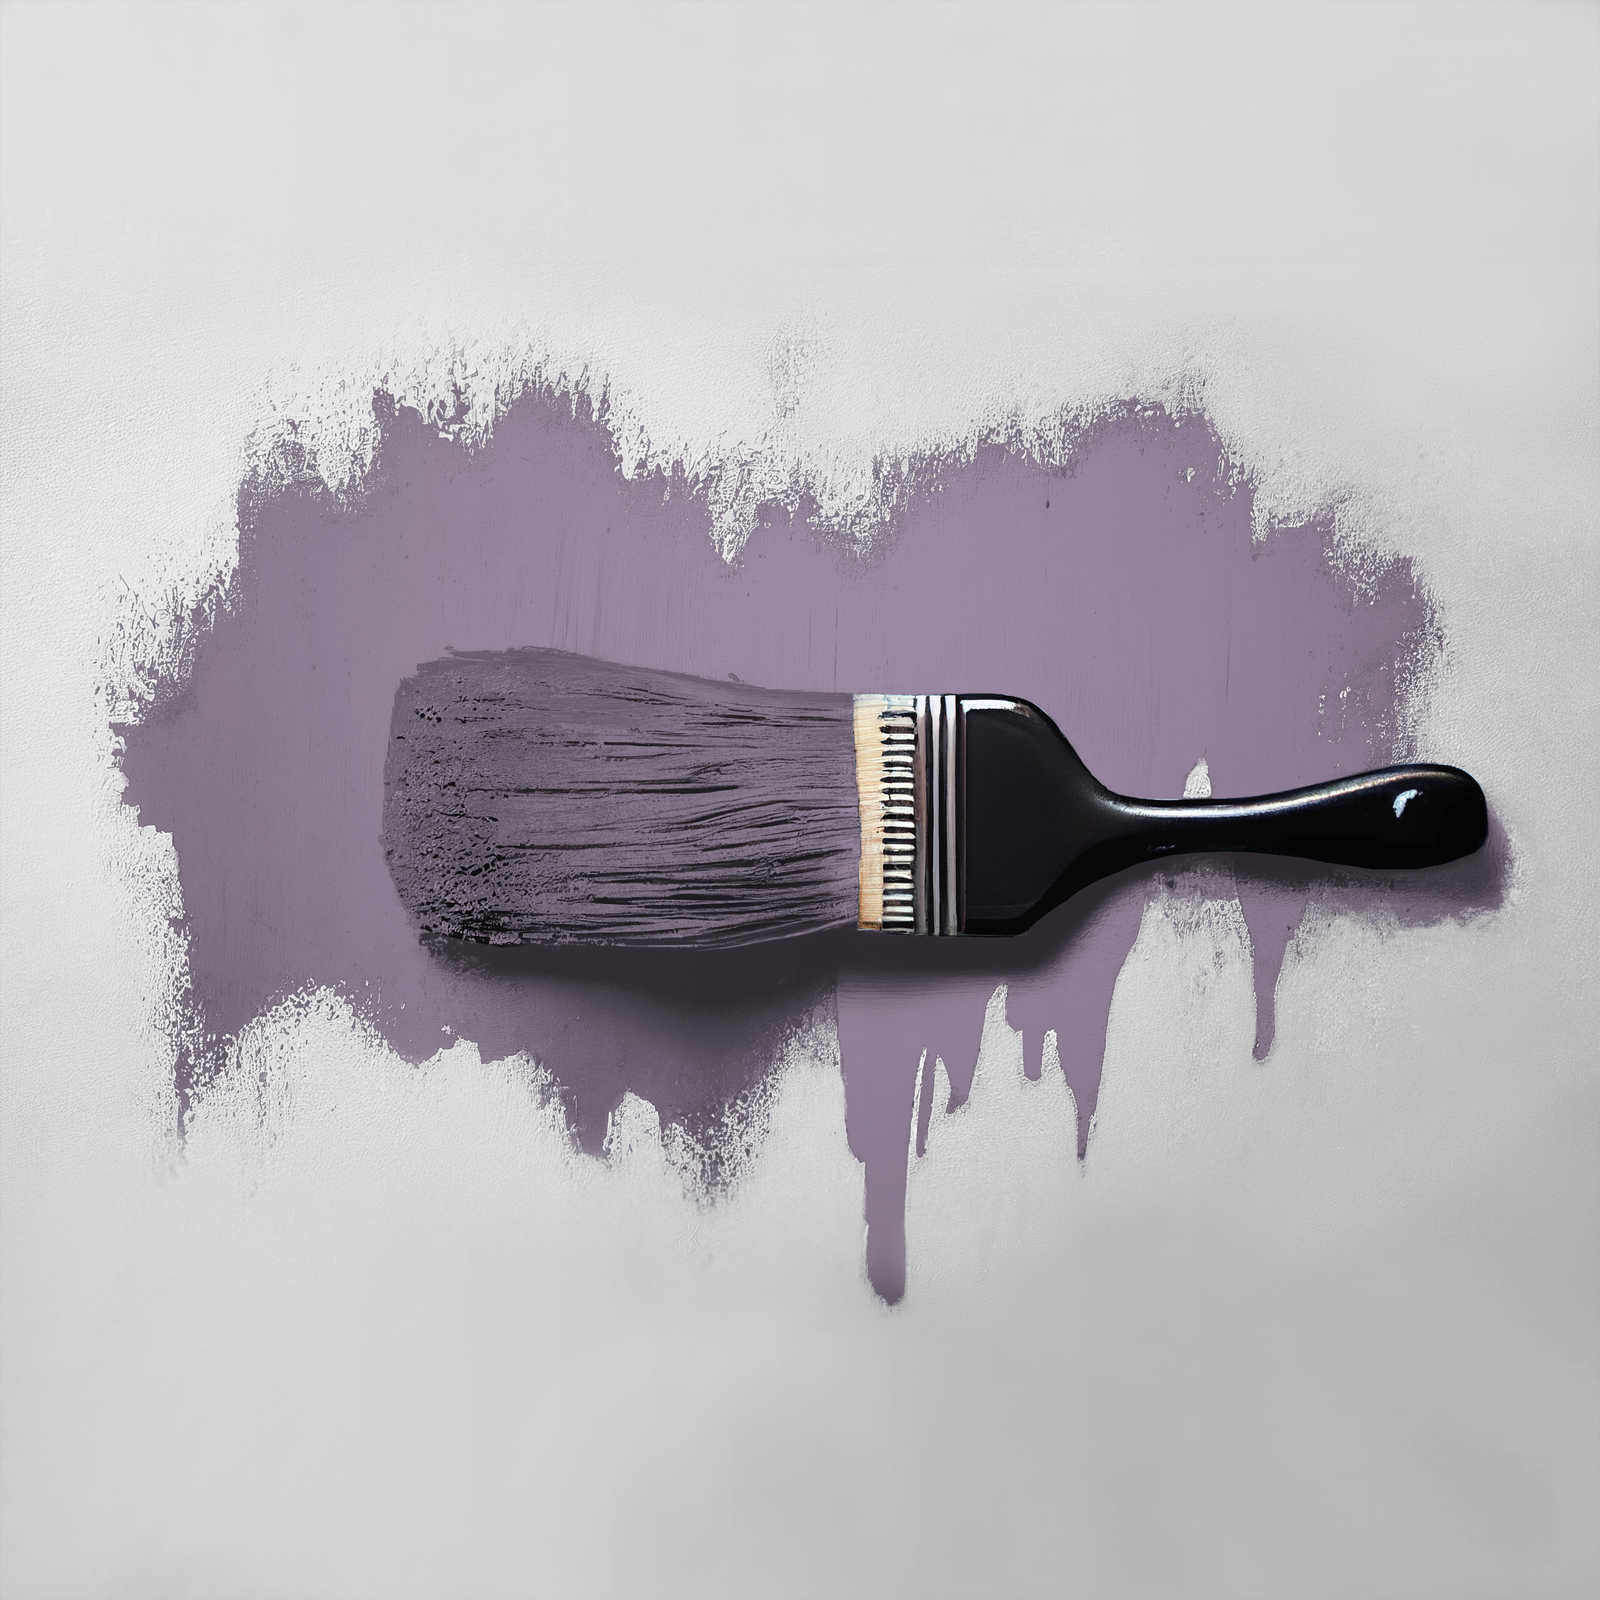             Peinture murale TCK2006 »Artful Aubergine« en violet vif – 2,5 litres
        